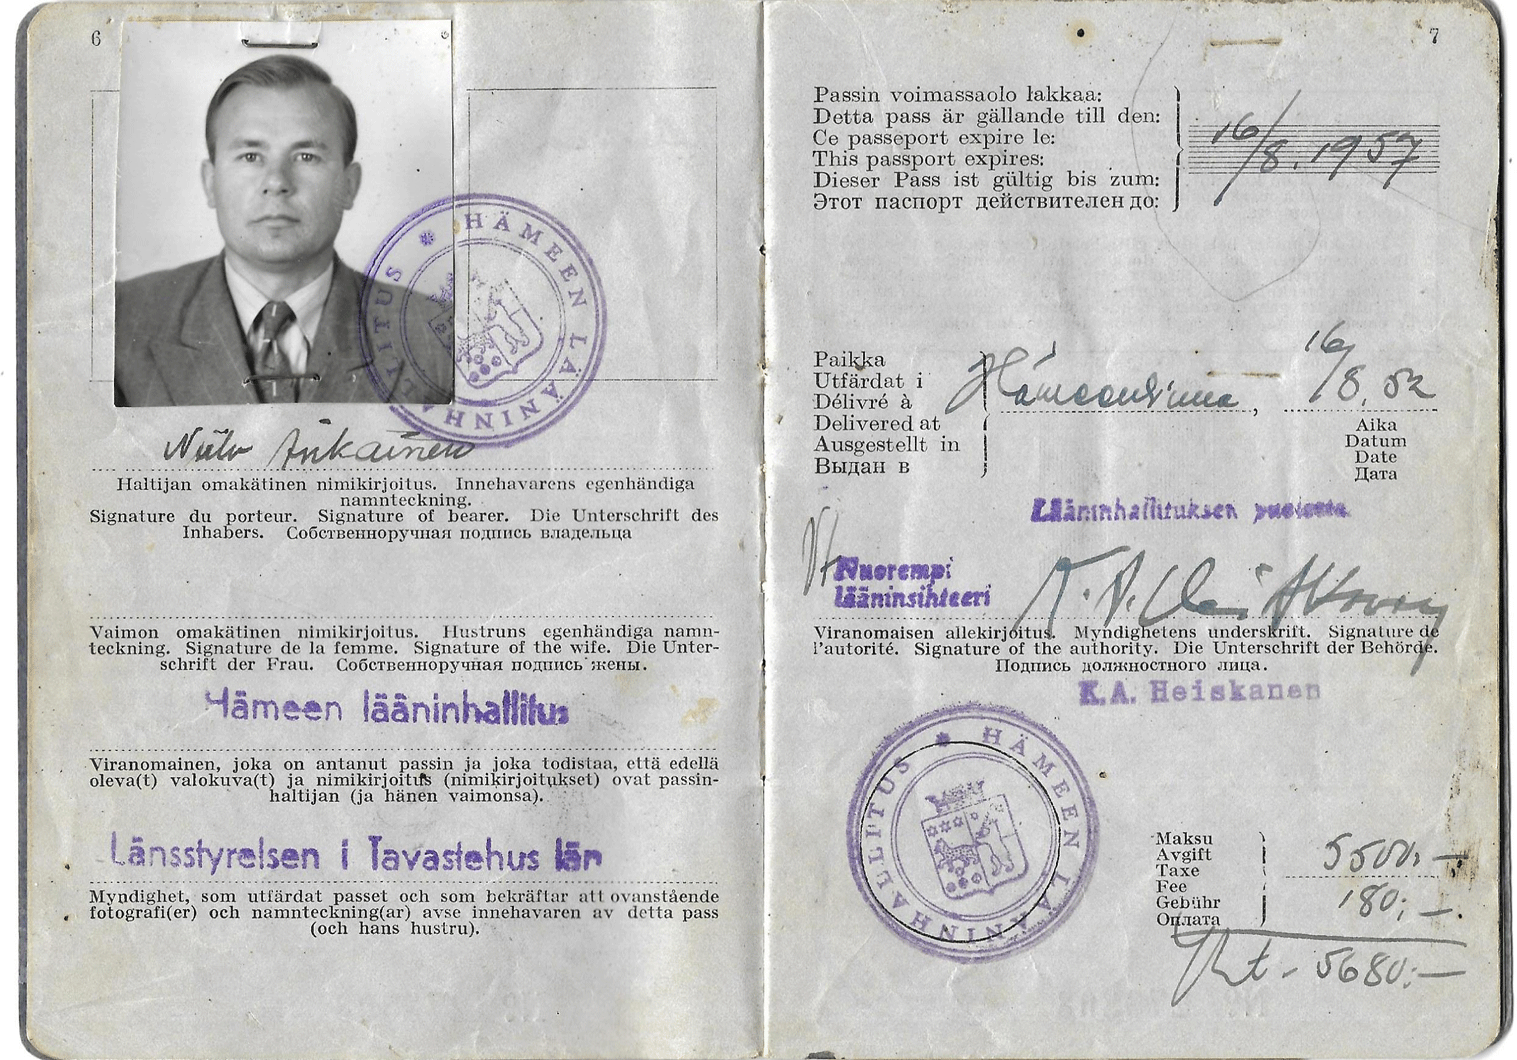 1952 passport used by Niilo Kalervo Askanian